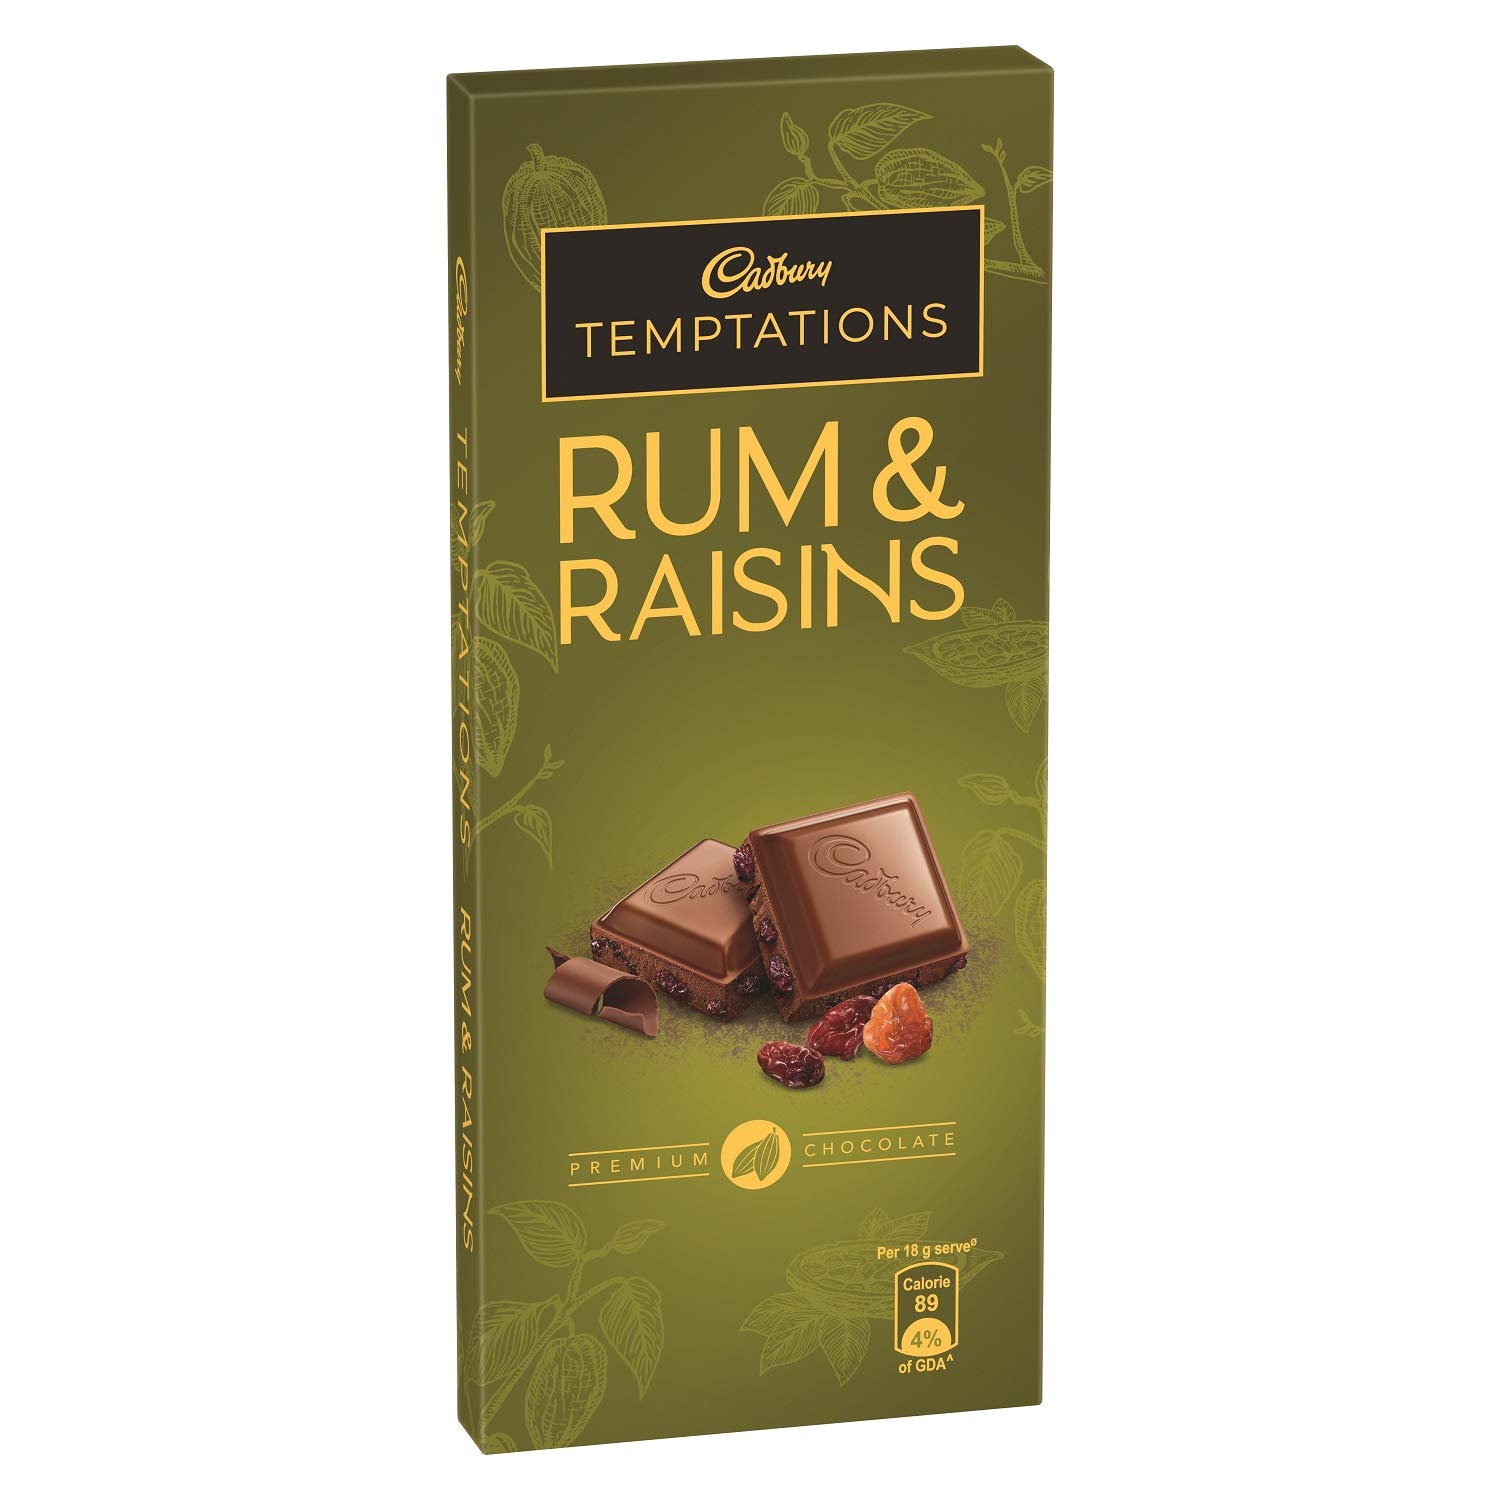 Cadbury Temptation Rum and Raisin Chocolate Bar Image